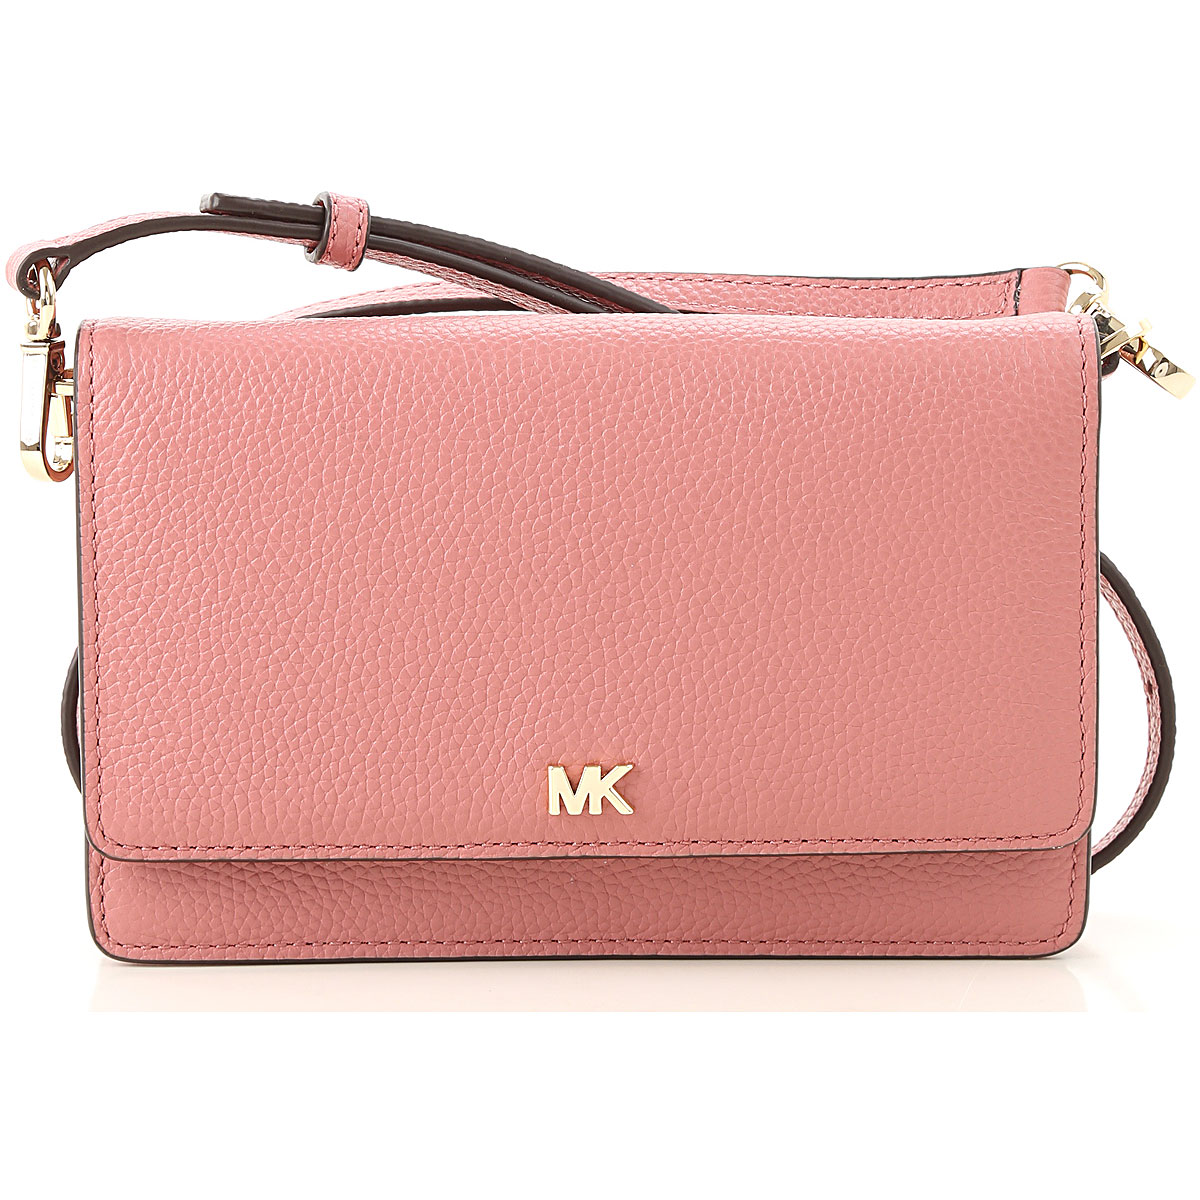 Handbags Michael Kors, Style code: 32t8tf5c9t-622-